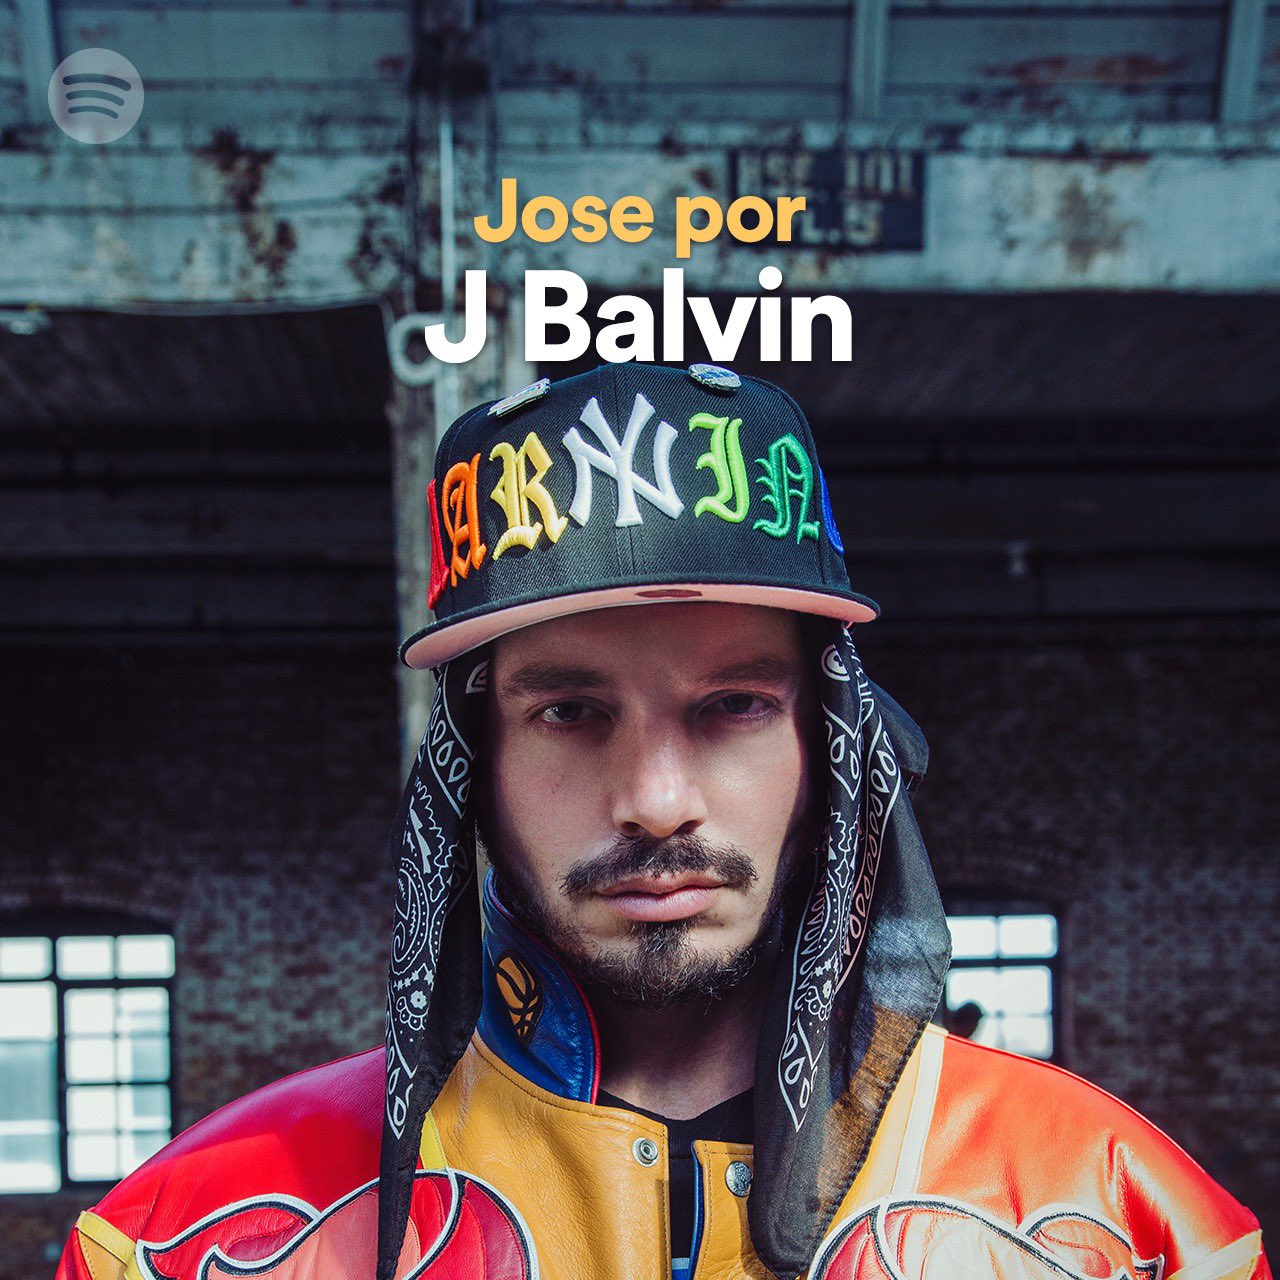 J BALVIN on X: Jose por J Balvin  https